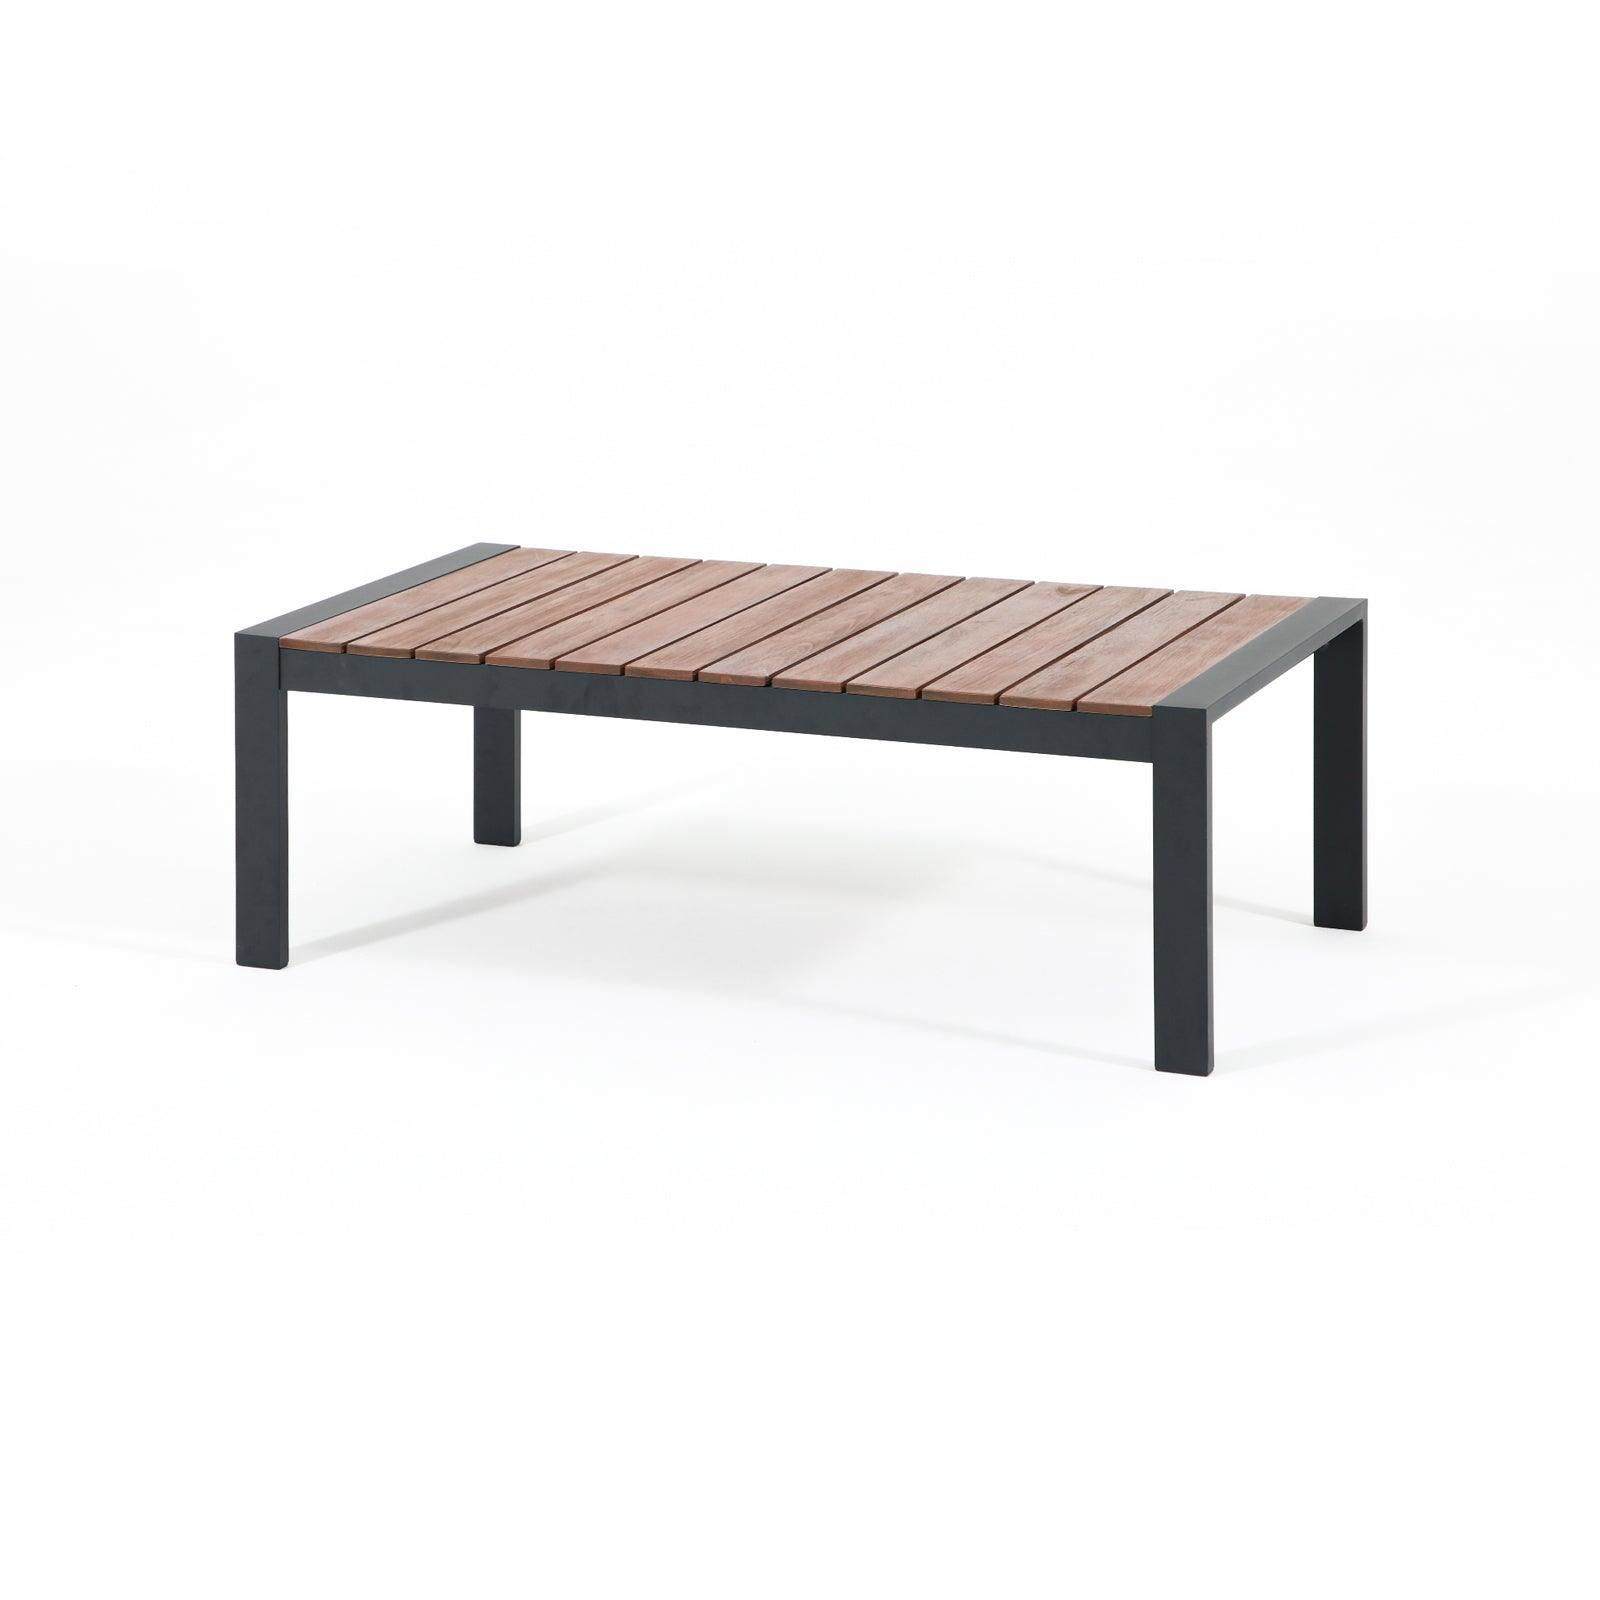 Ronda Modern Grey aluminum outdoor coffee table with wood design, grey finish, slat-top eucalyptus wood finish table, Left view- Jardina Furniture